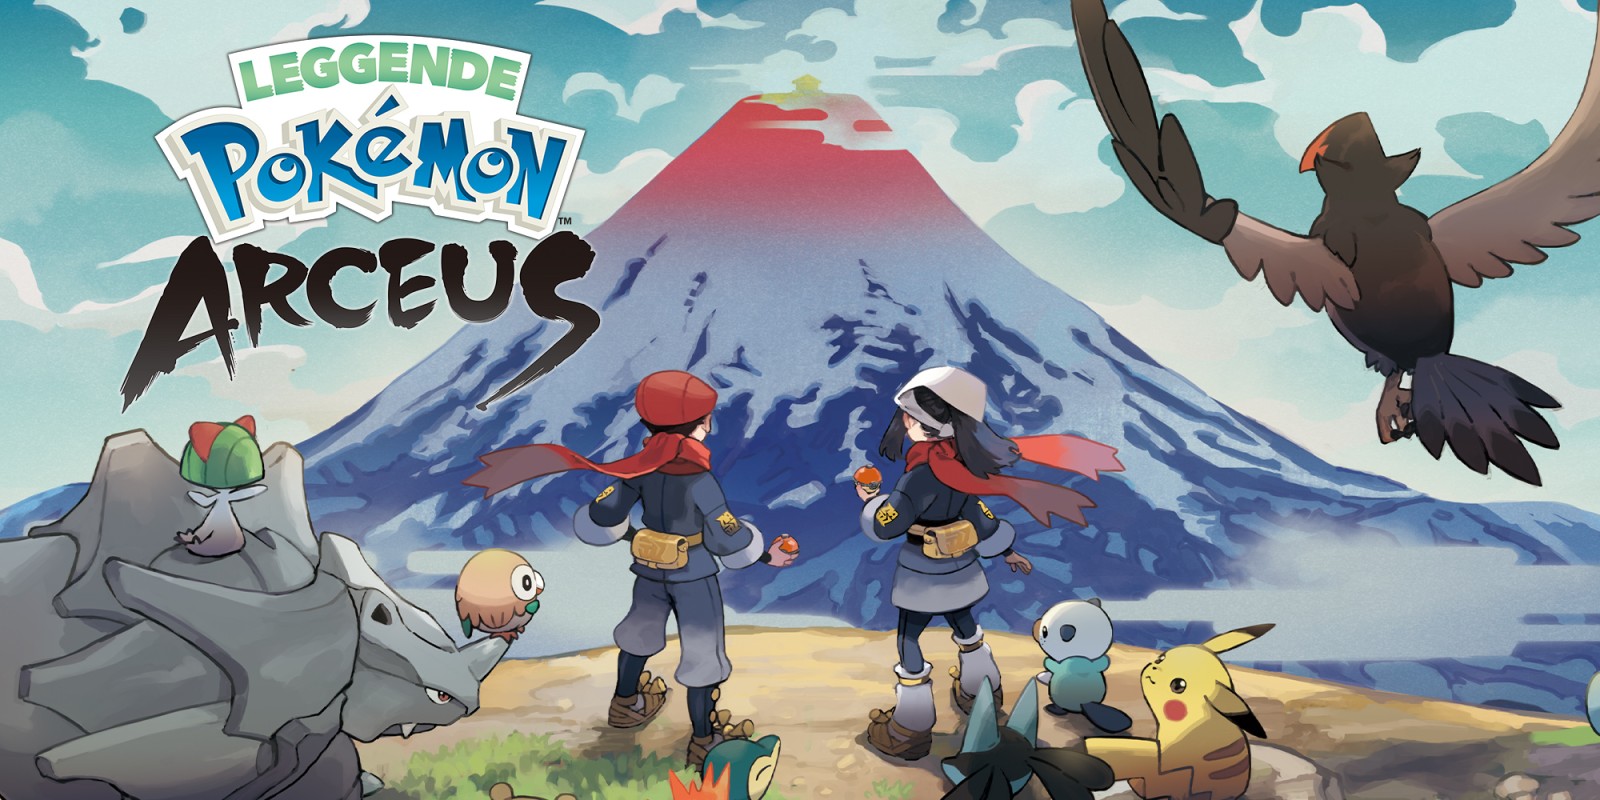  Leggende Pokémon: Arceus la recensione